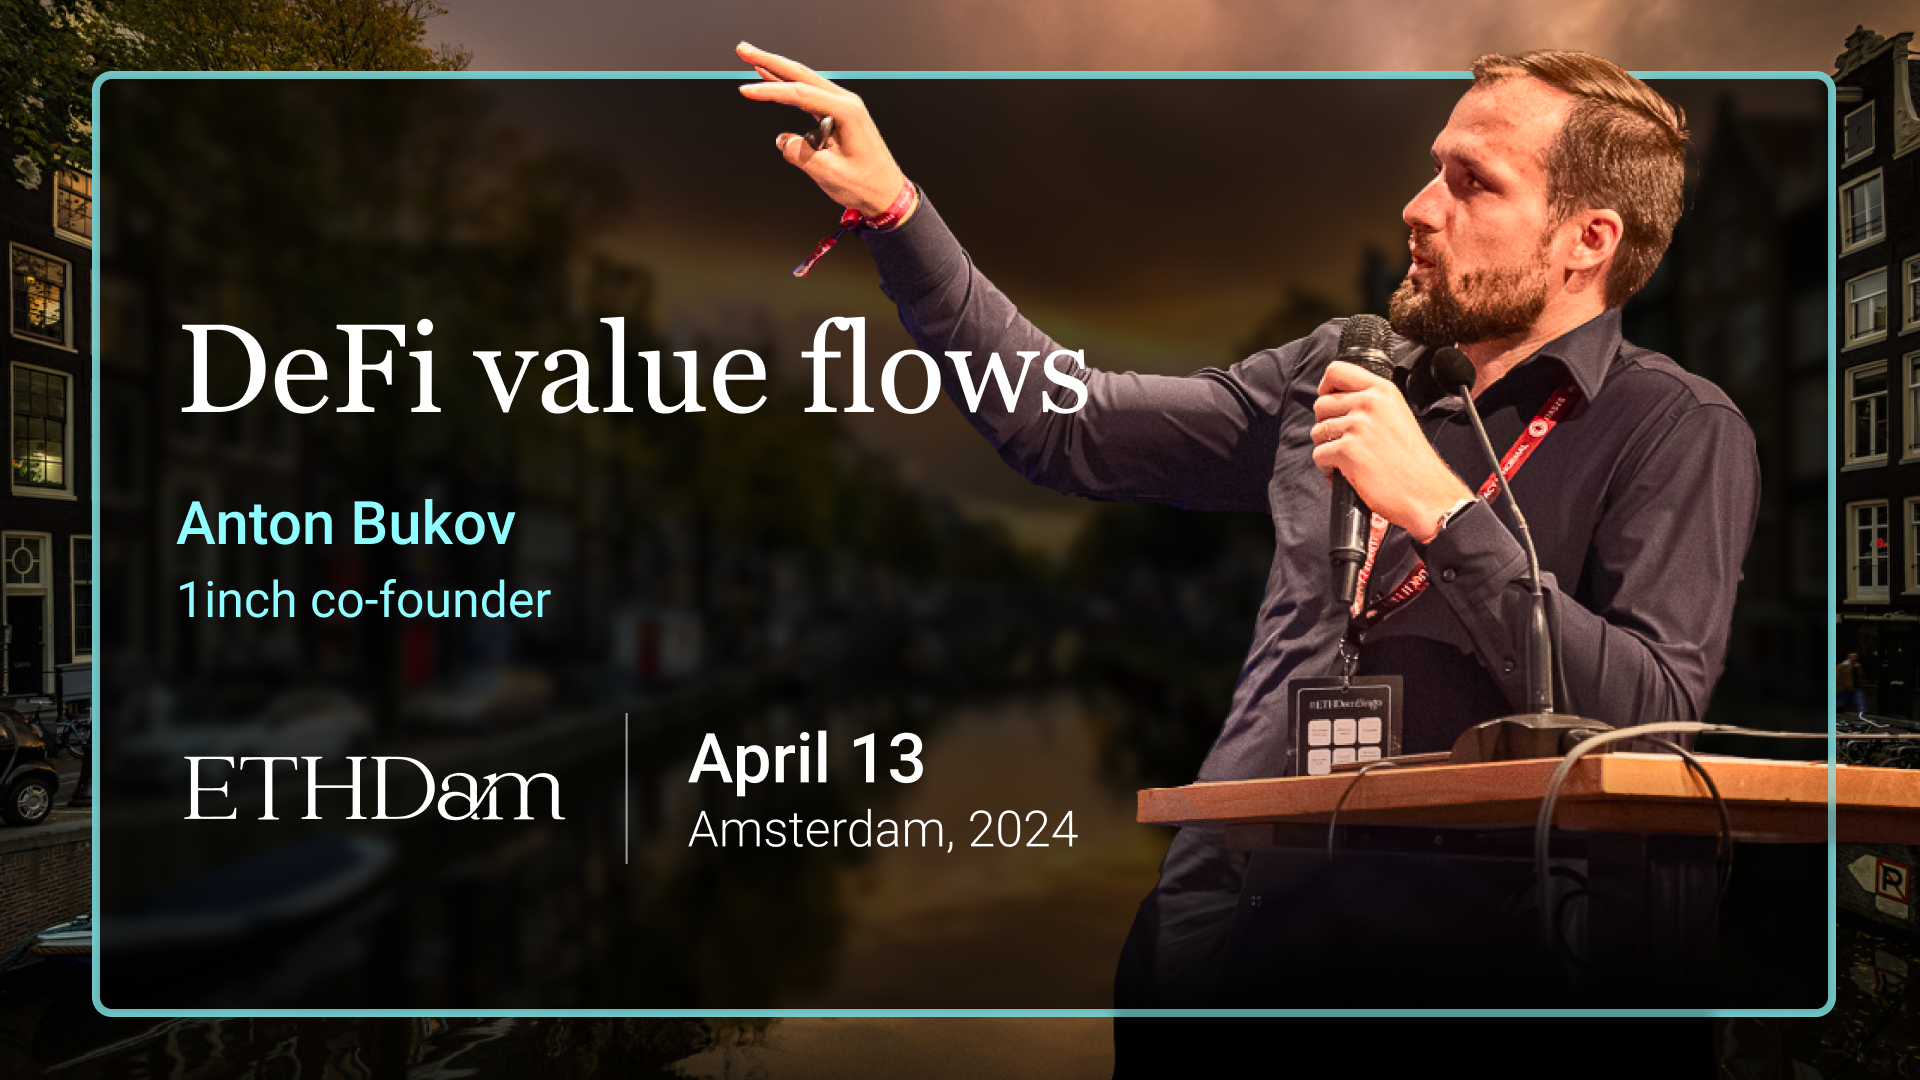 Anton Bukov's insights into DeFi value flows